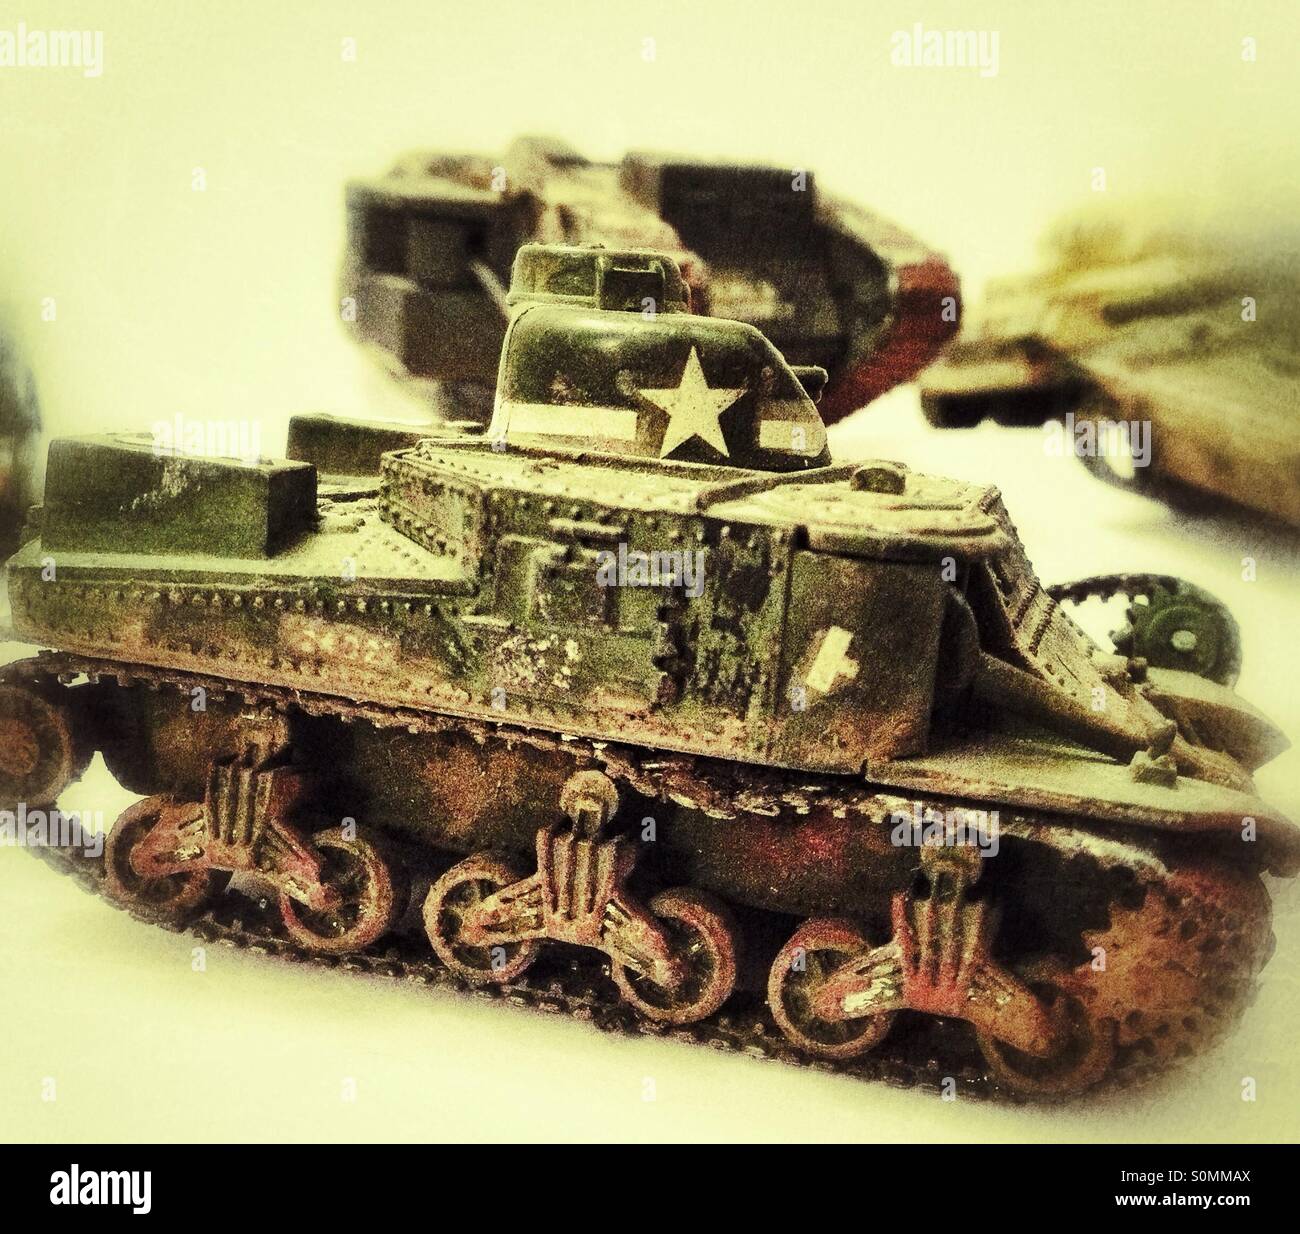 Model tanks. Sherman tank in foreground. Stock Photo